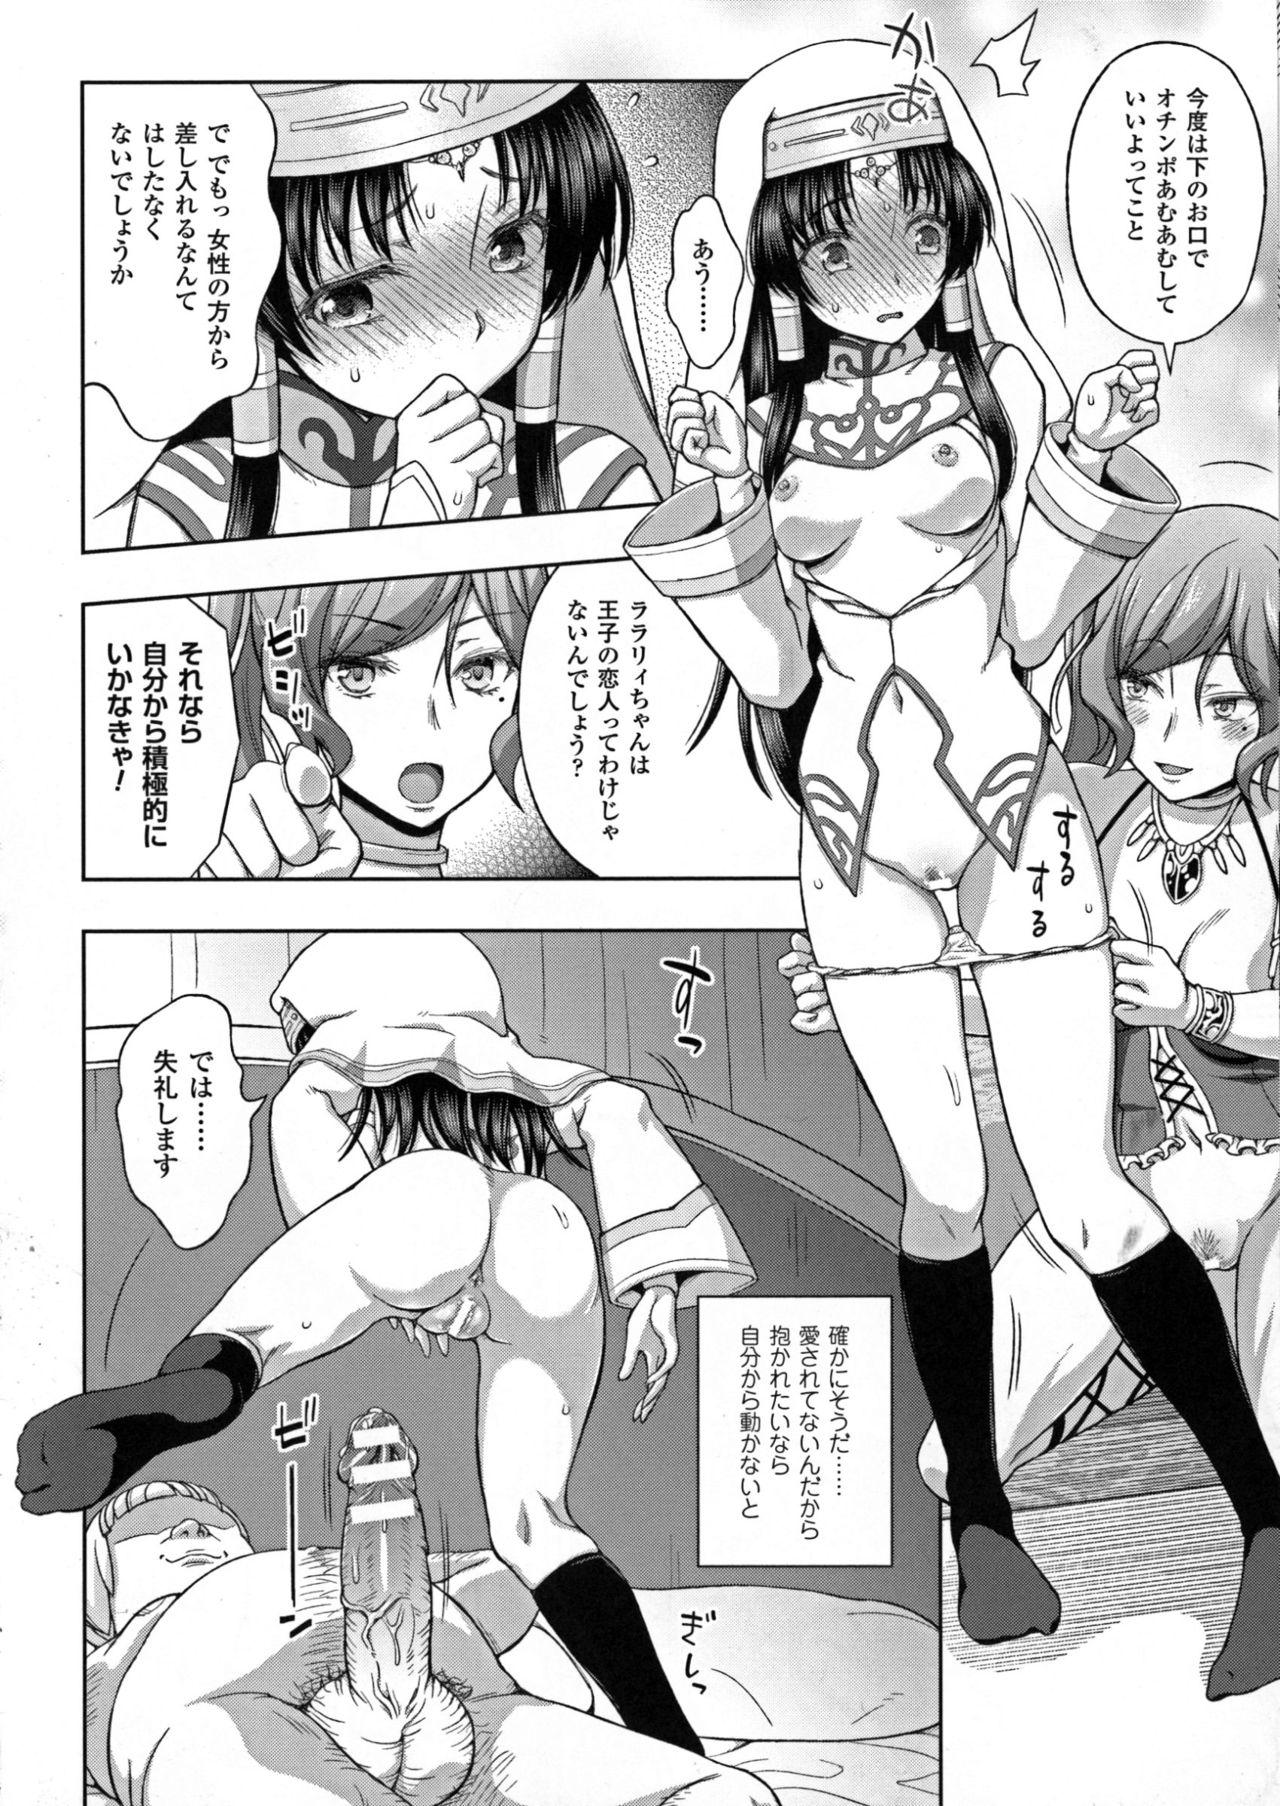 Seigi no Heroine Kangoku File DX Vol. 7 42